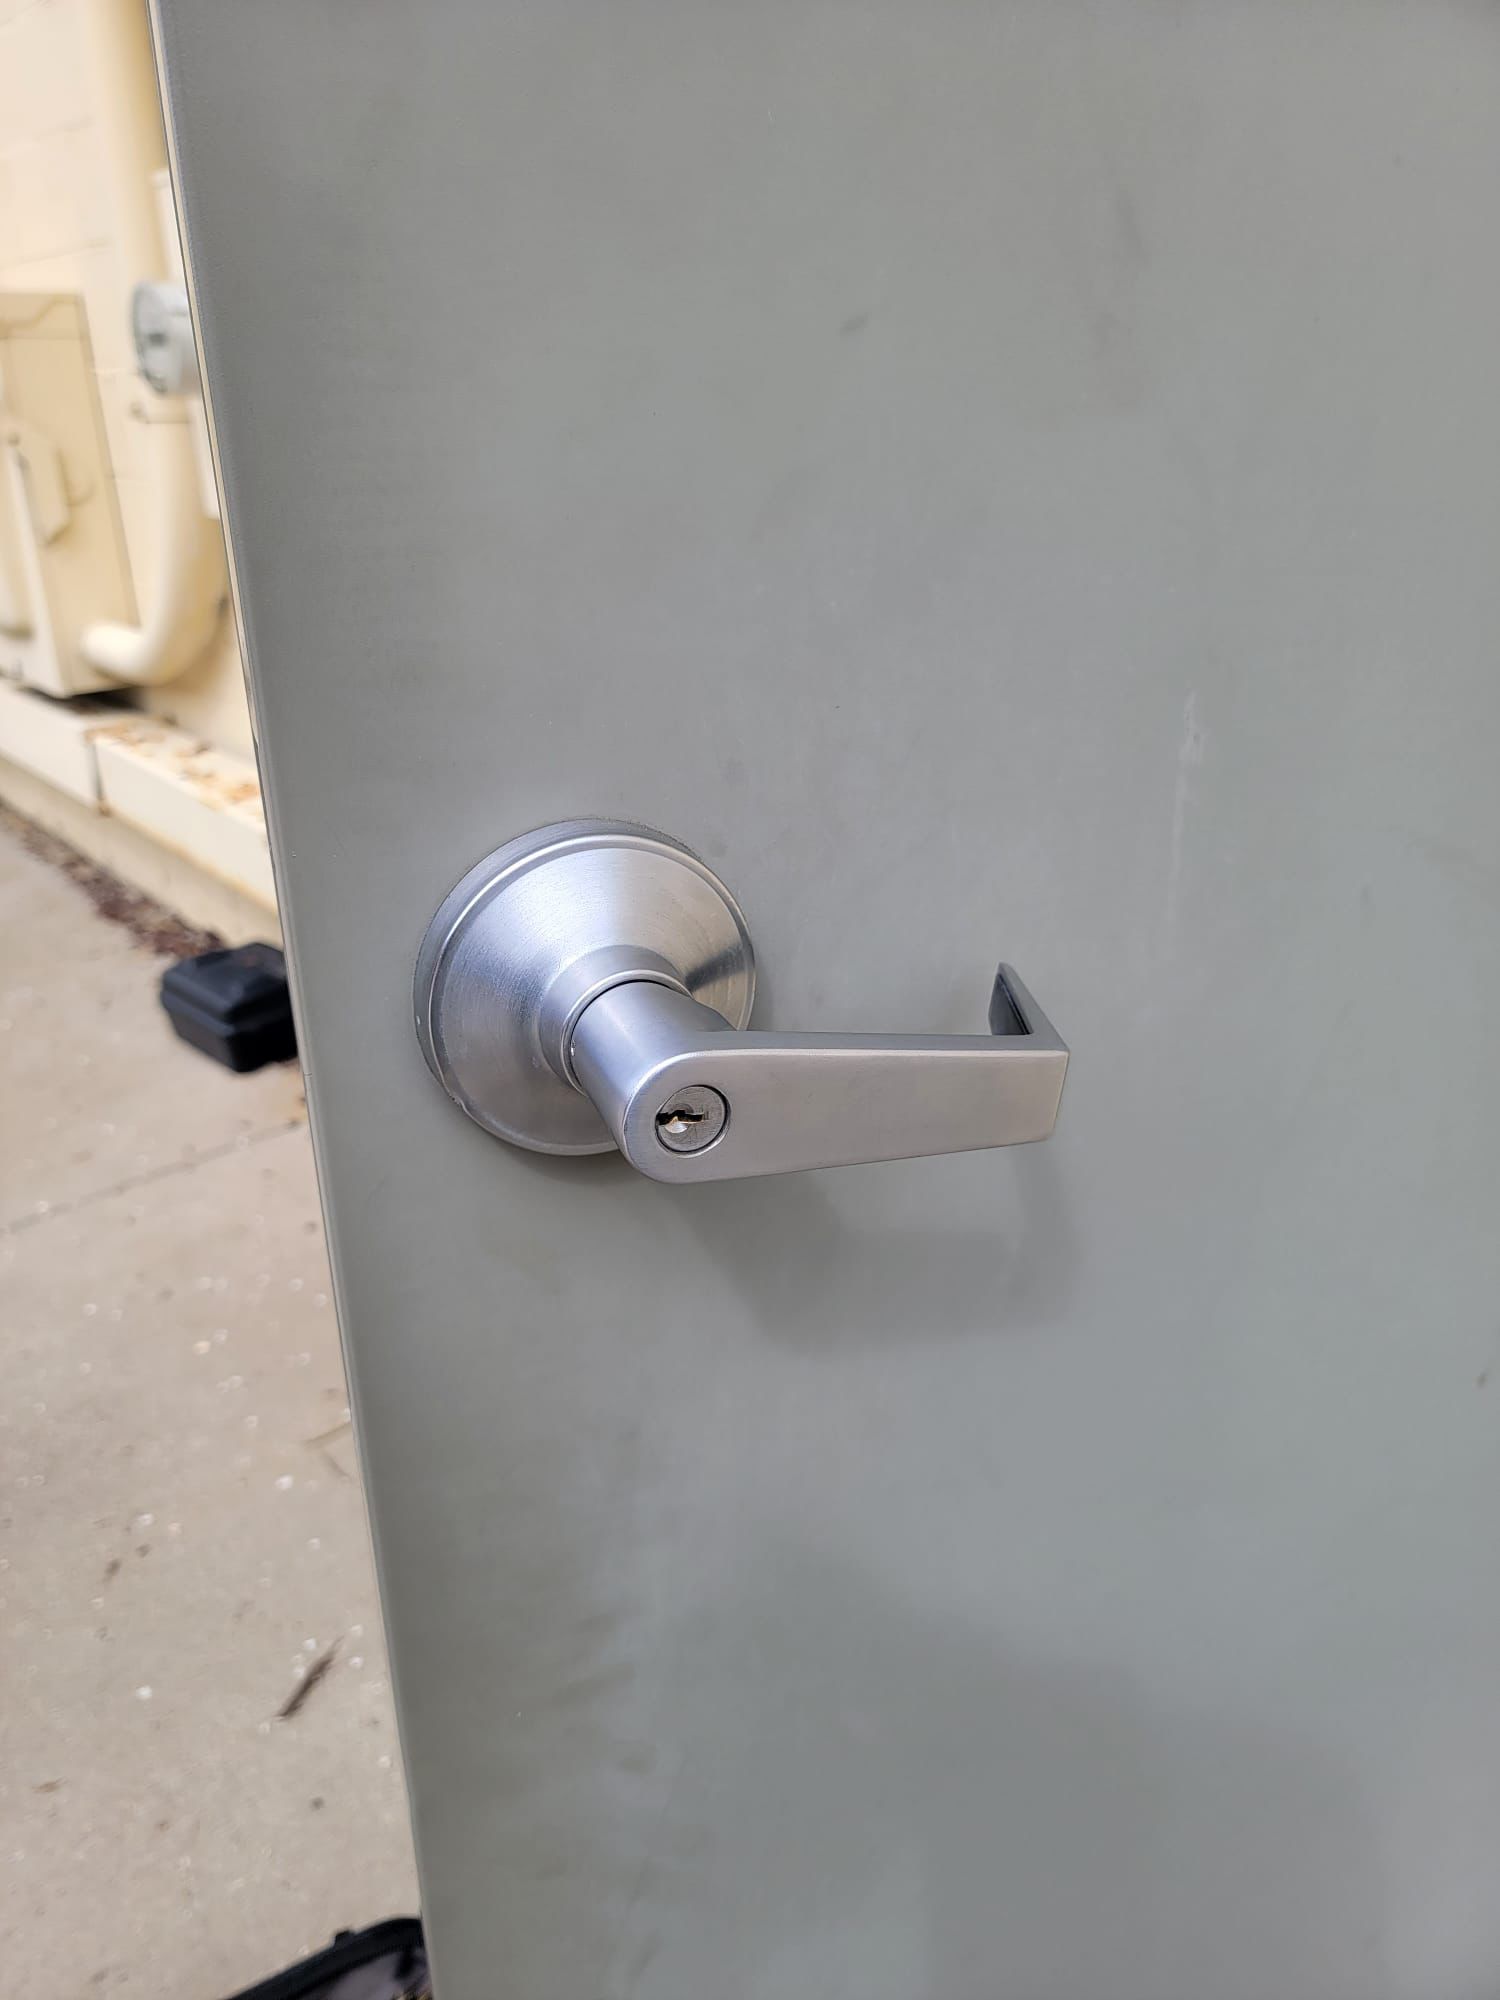 Push bar lock repaird by magic lock charlotte nc